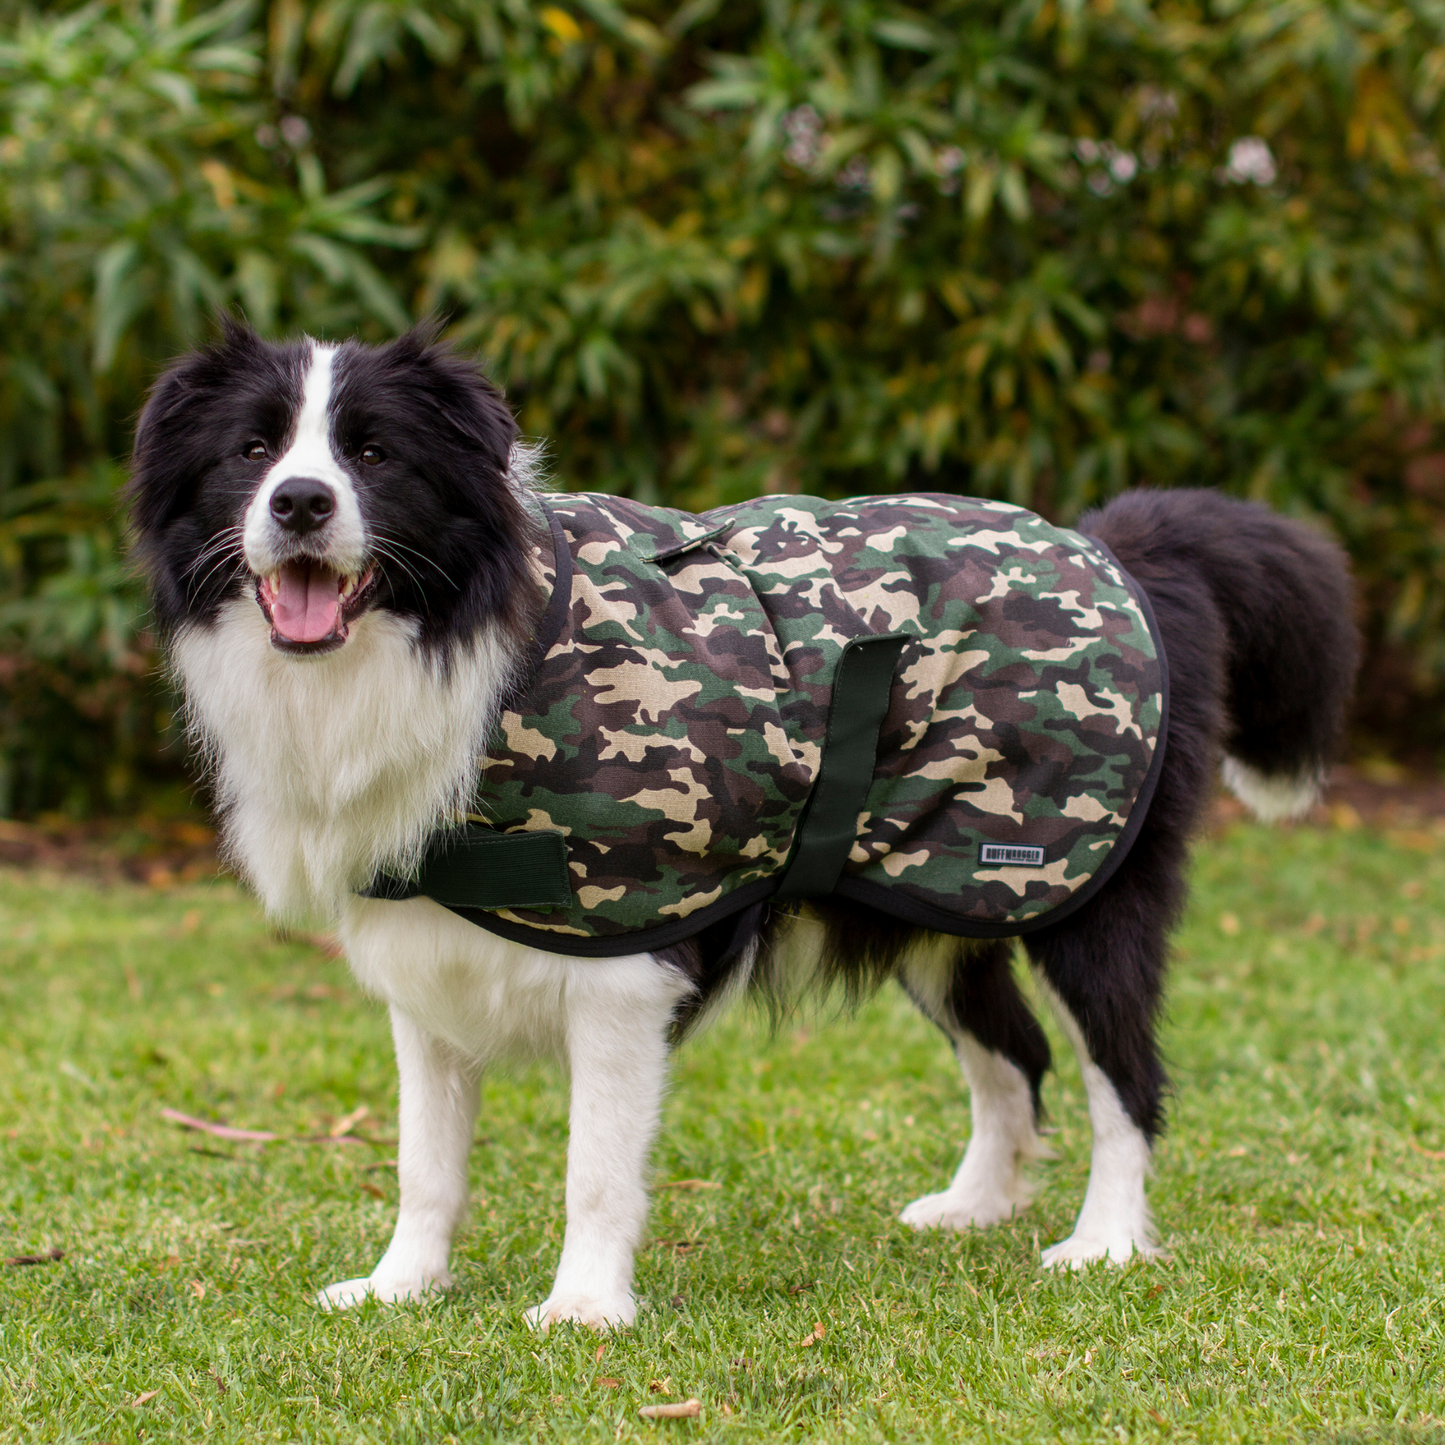 Ruff N Rugged Camouflage Oilskin Dog Coat